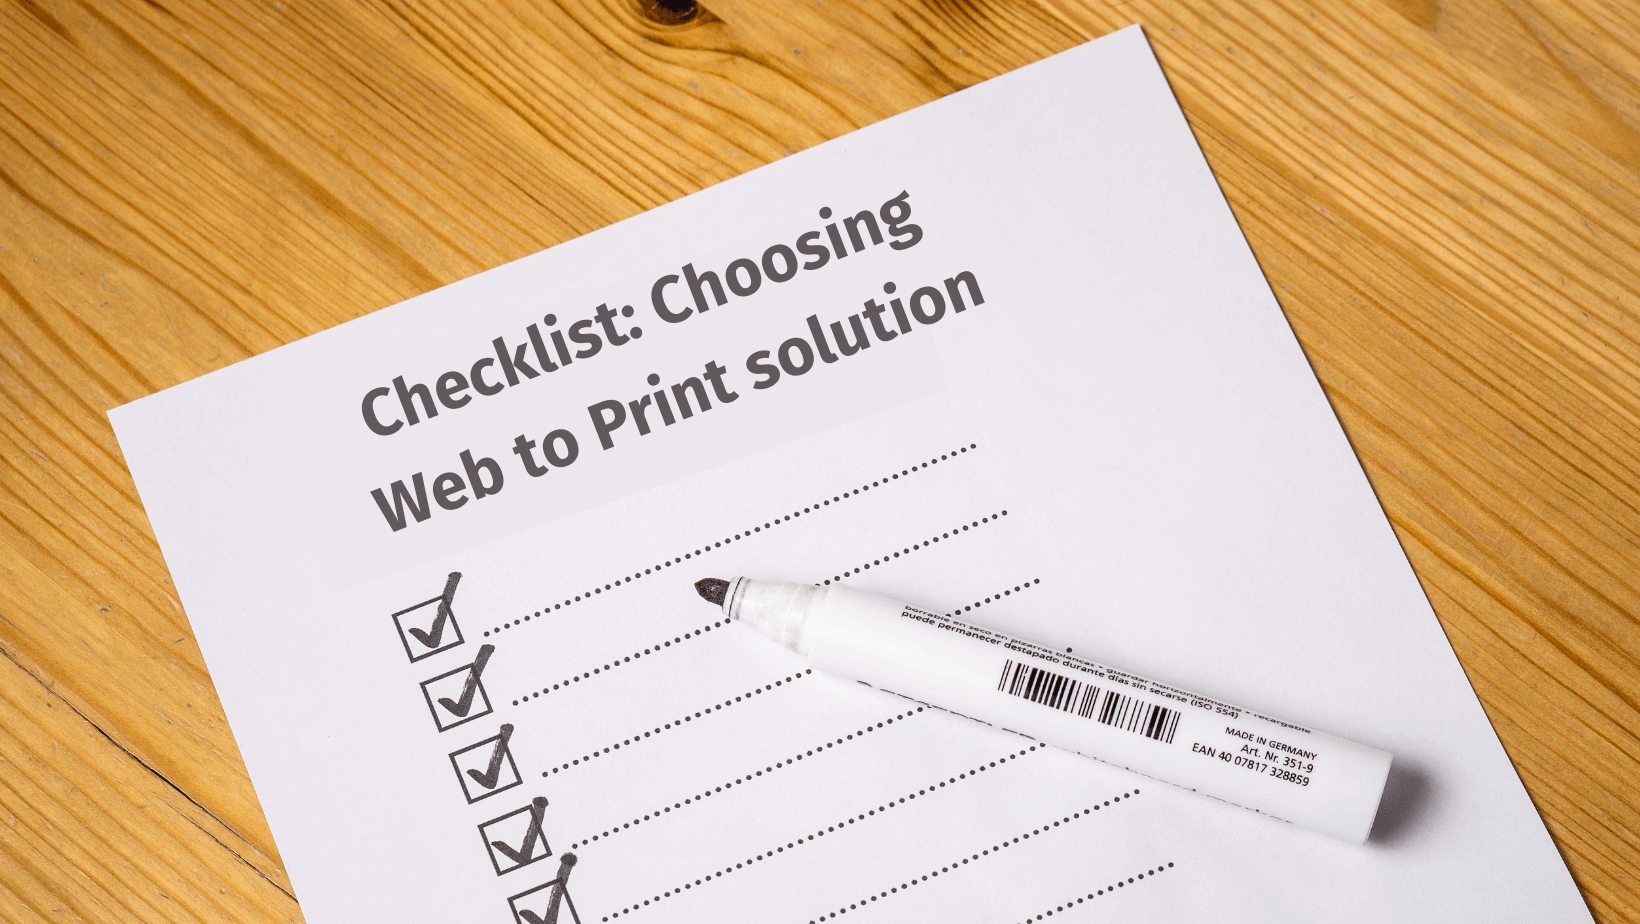 Checklist for choosing web to print solution